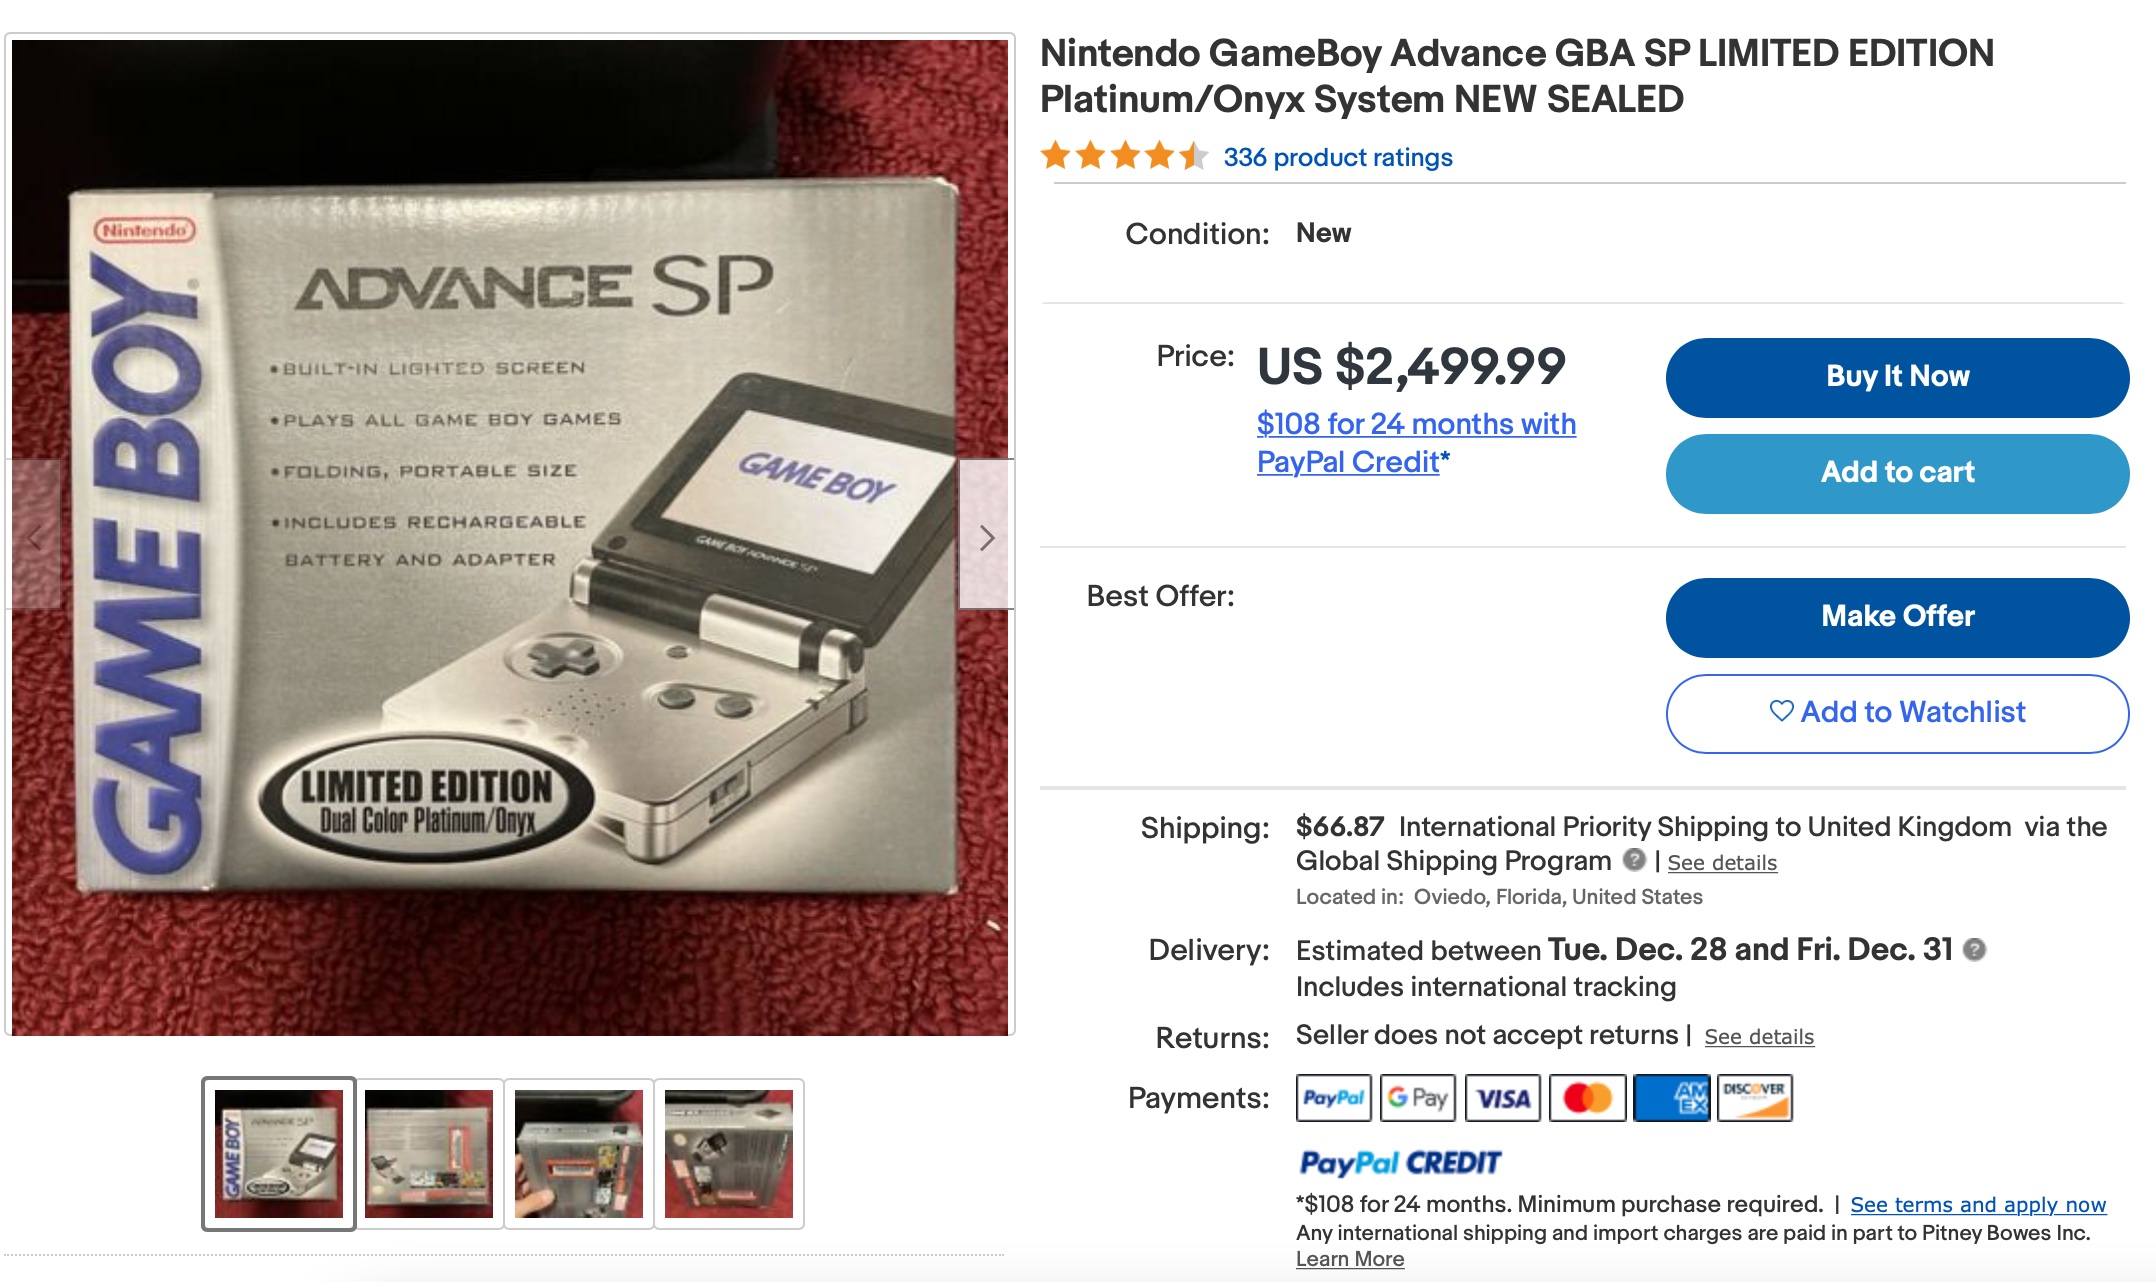 Game Boy Advance eBay